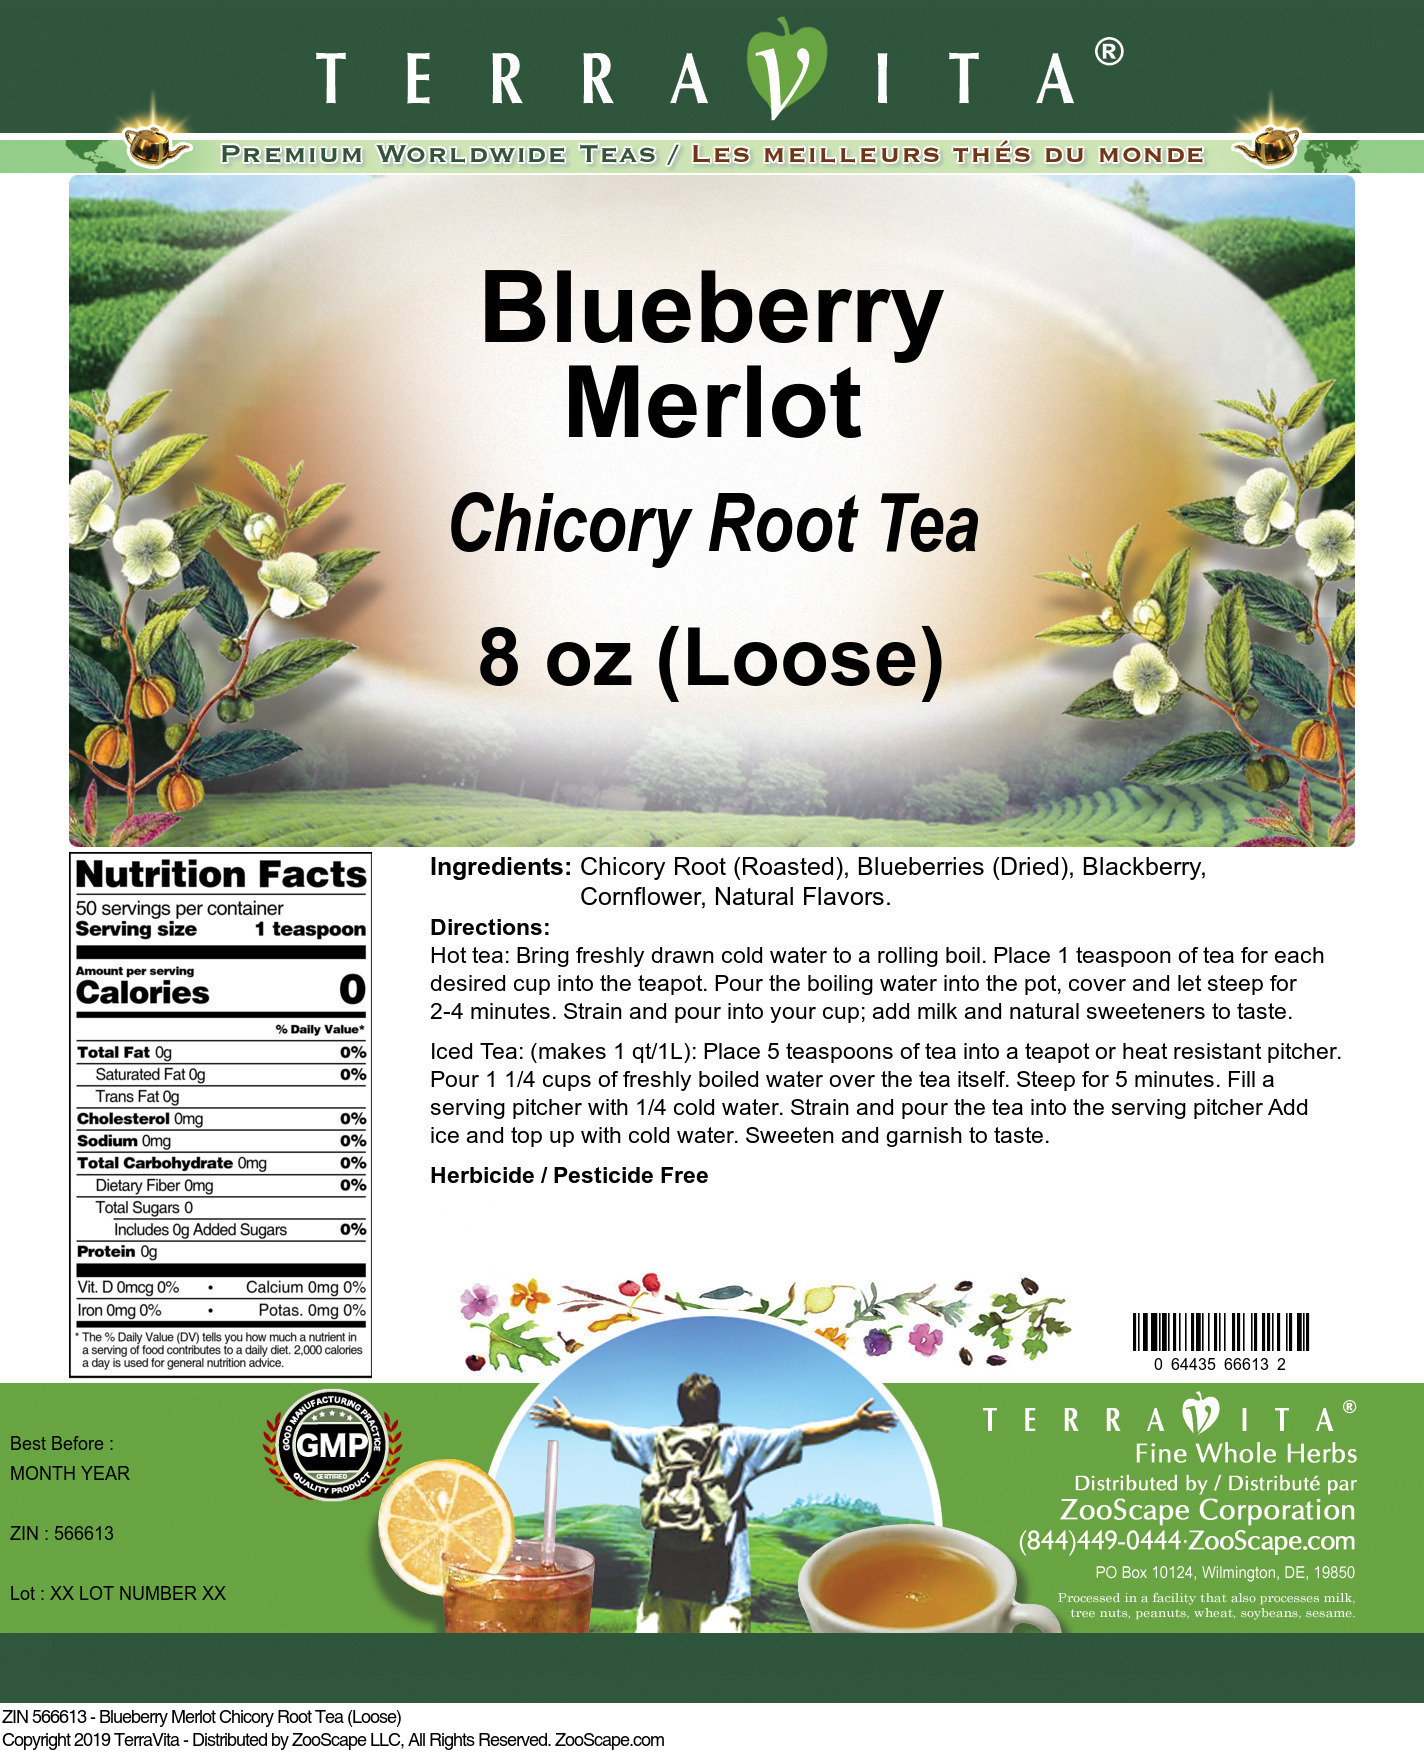 Blueberry Merlot Chicory Root Tea (Loose) - Label